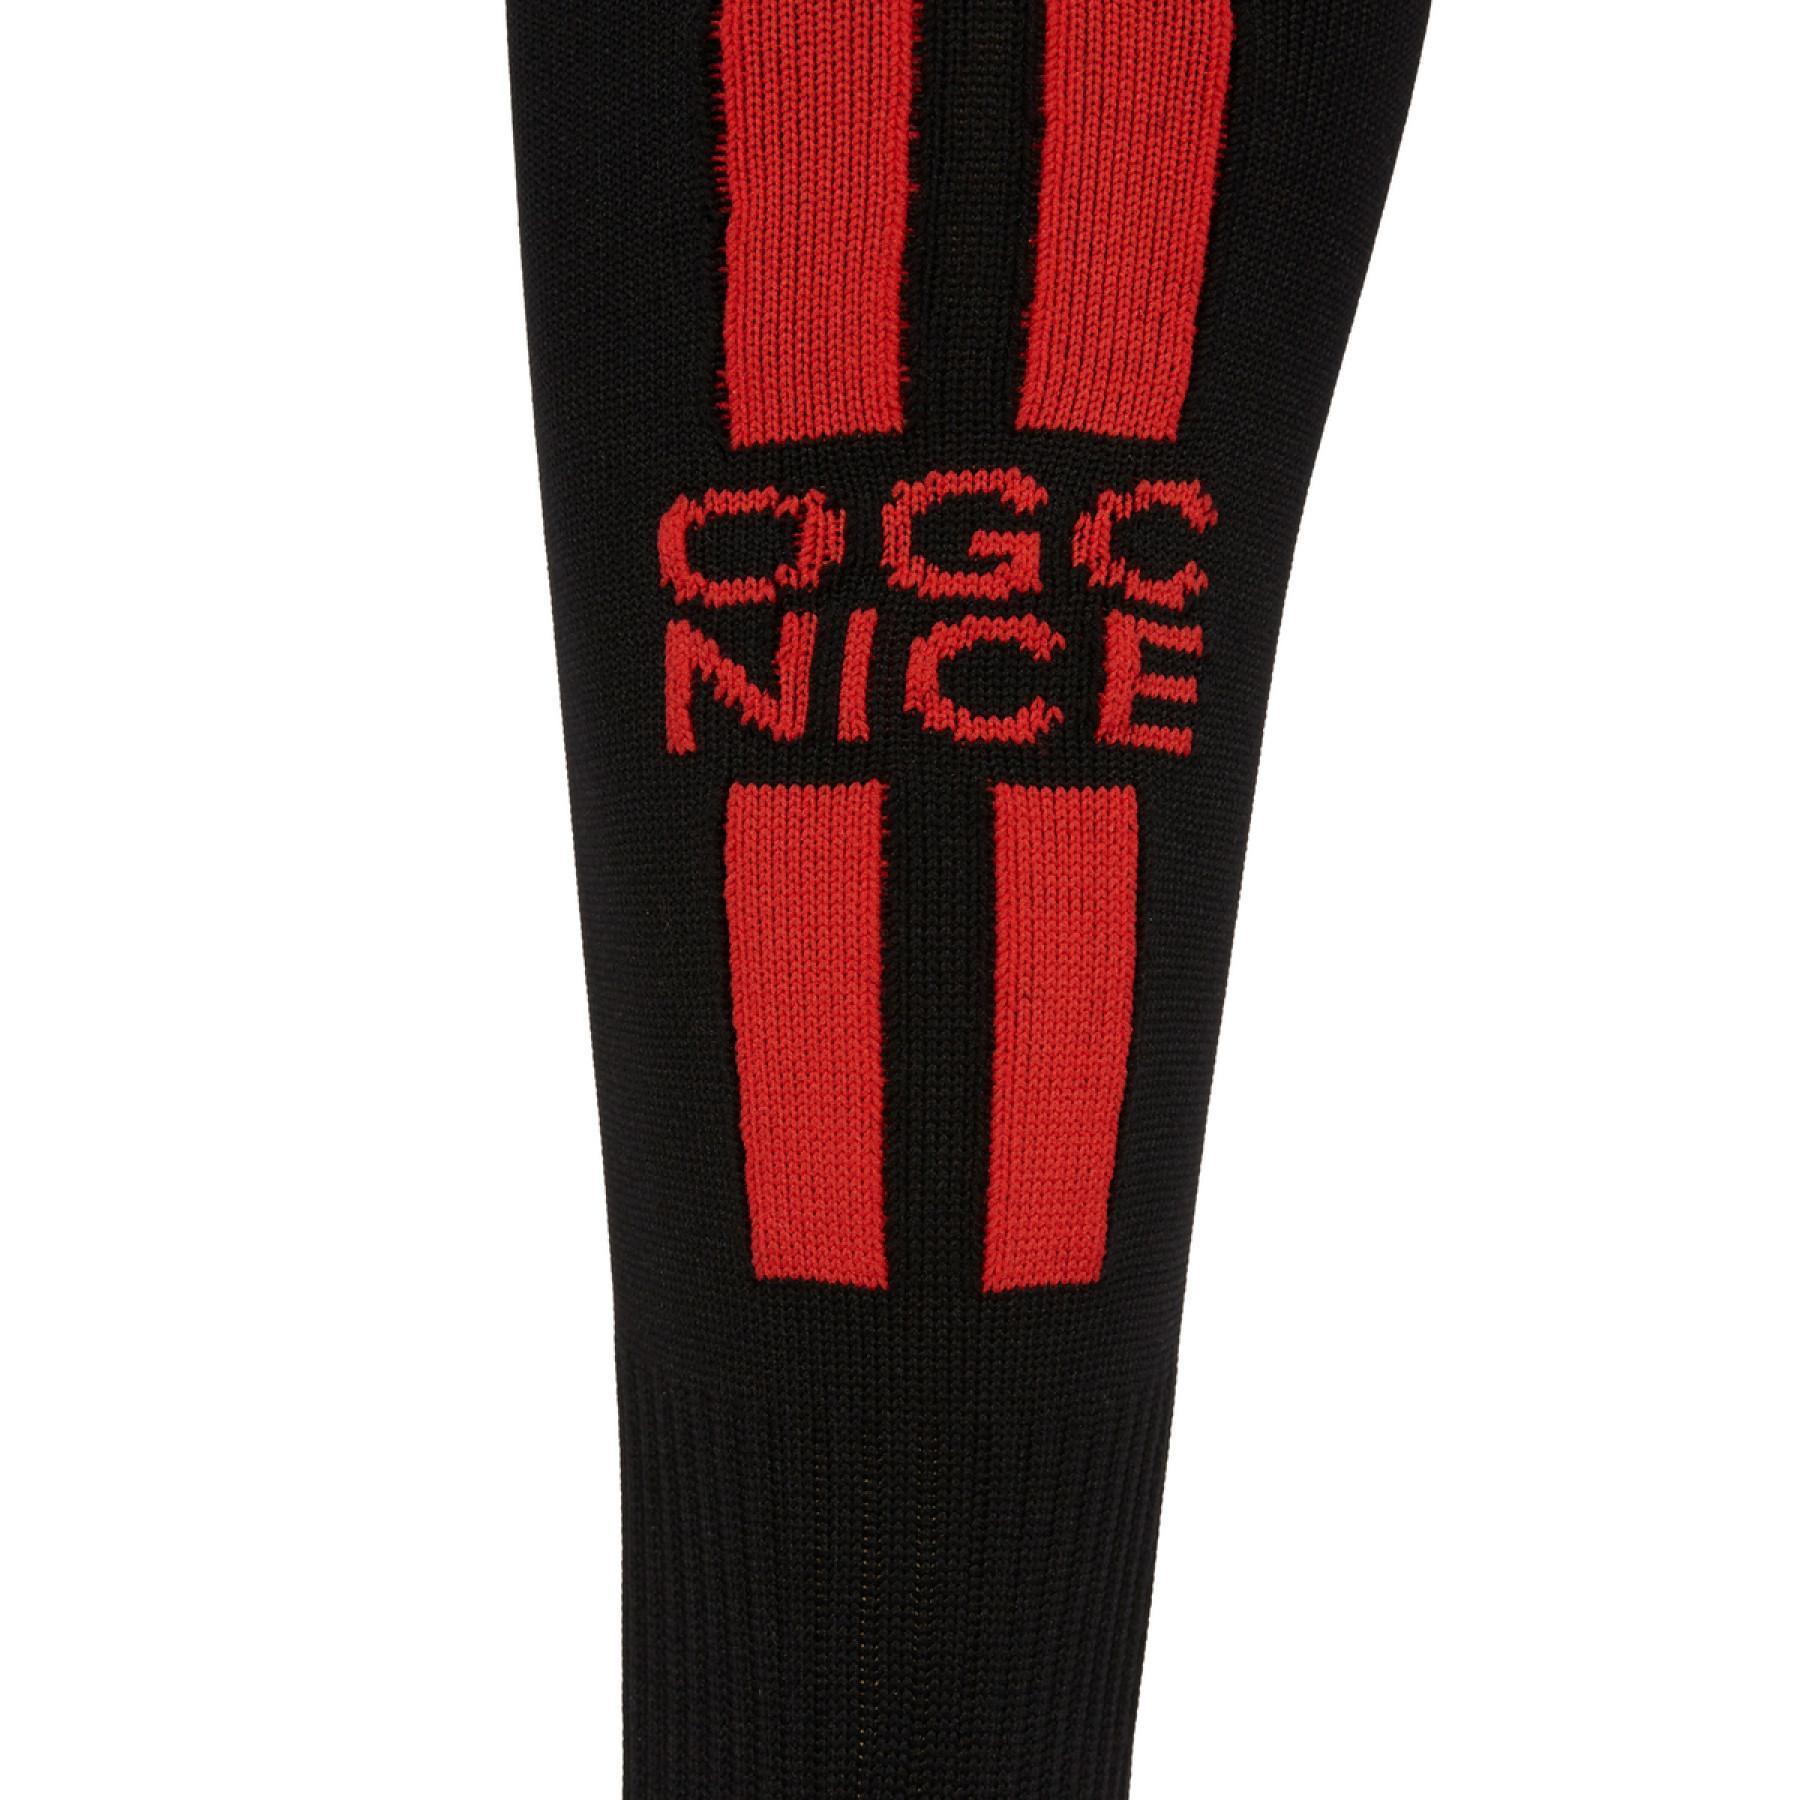 Third socks OGC Nice 2018/19